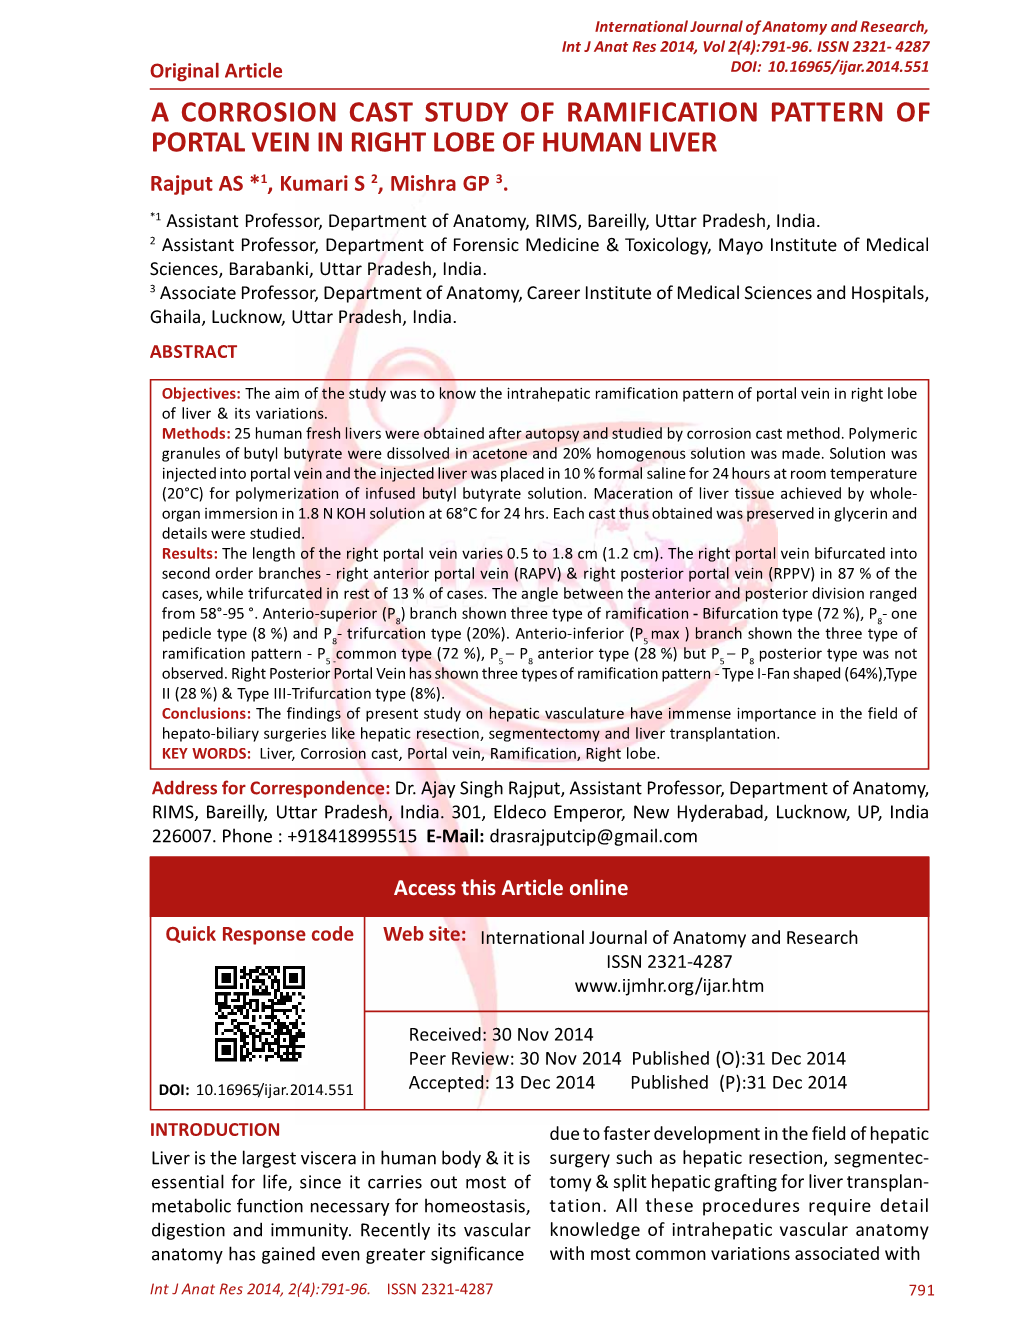 A CORROSION CAST STUDY of RAMIFICATION PATTERN of PORTAL VEIN in RIGHT LOBE of HUMAN LIVER Rajput AS *1, Kumari S 2, Mishra GP 3